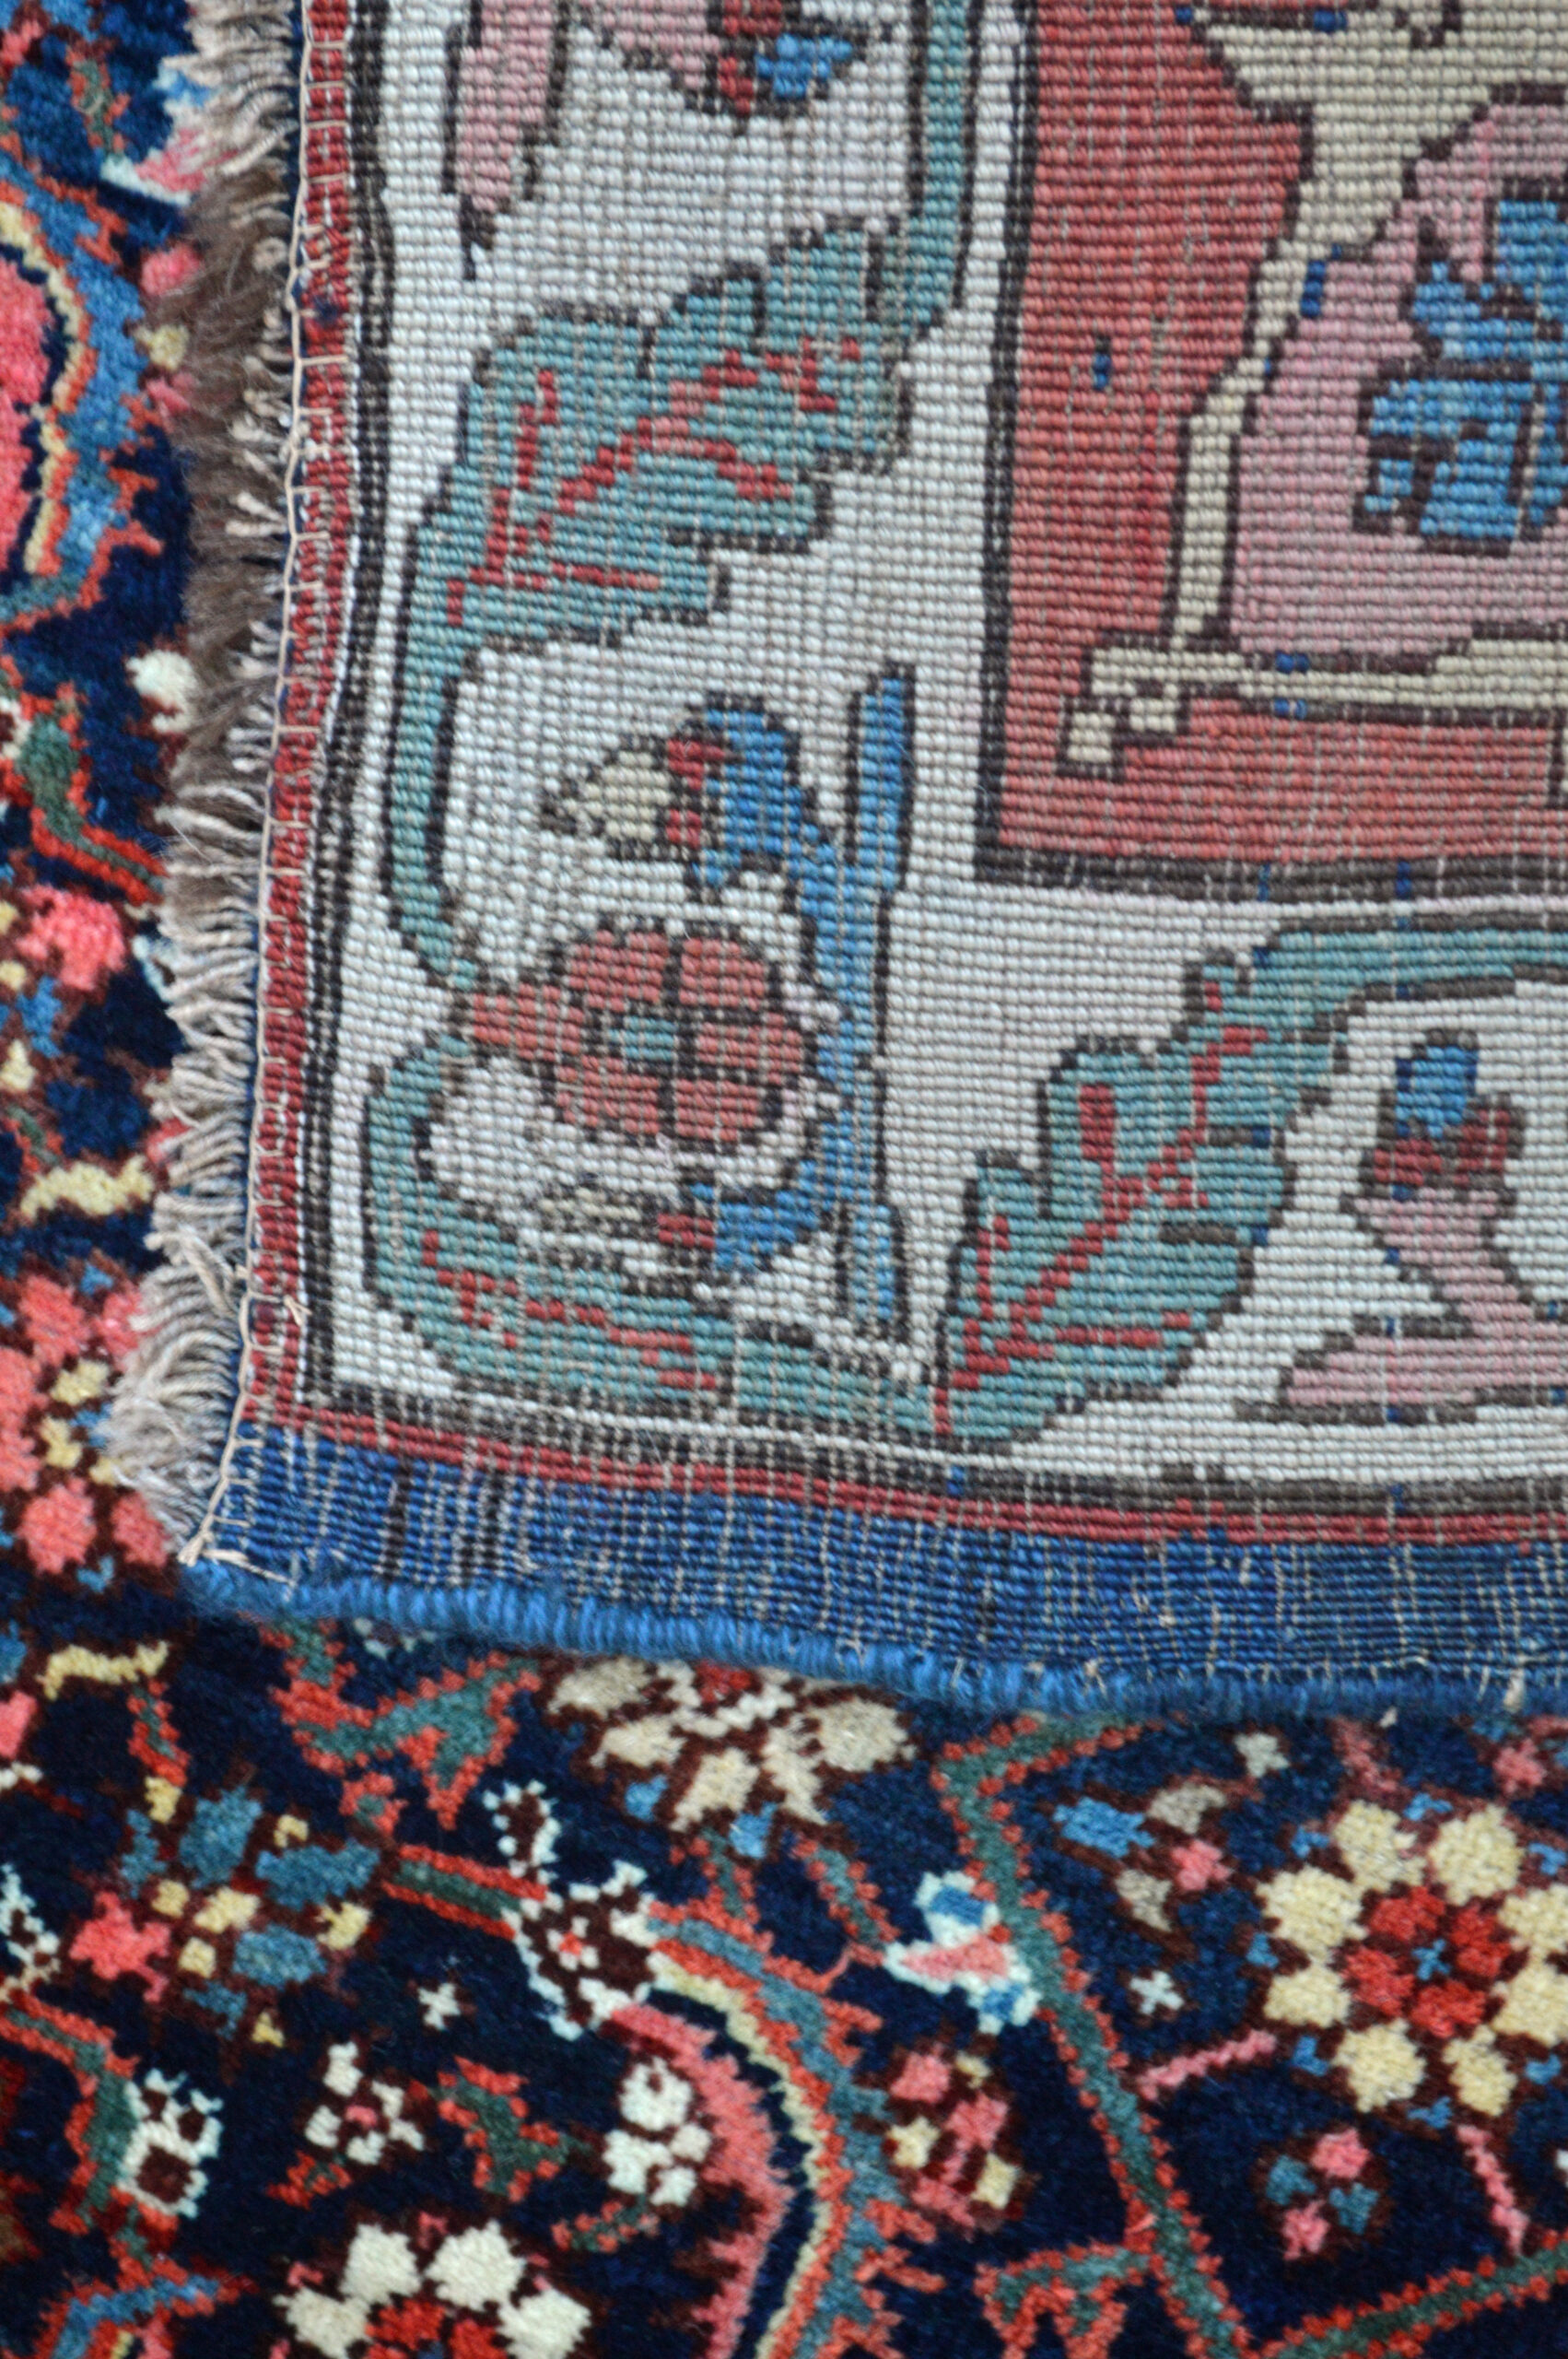 Weave detail from an antique Persian Bidjar carpet - Douglas Stock Gallery antique Oriental rugs Boston,MA area